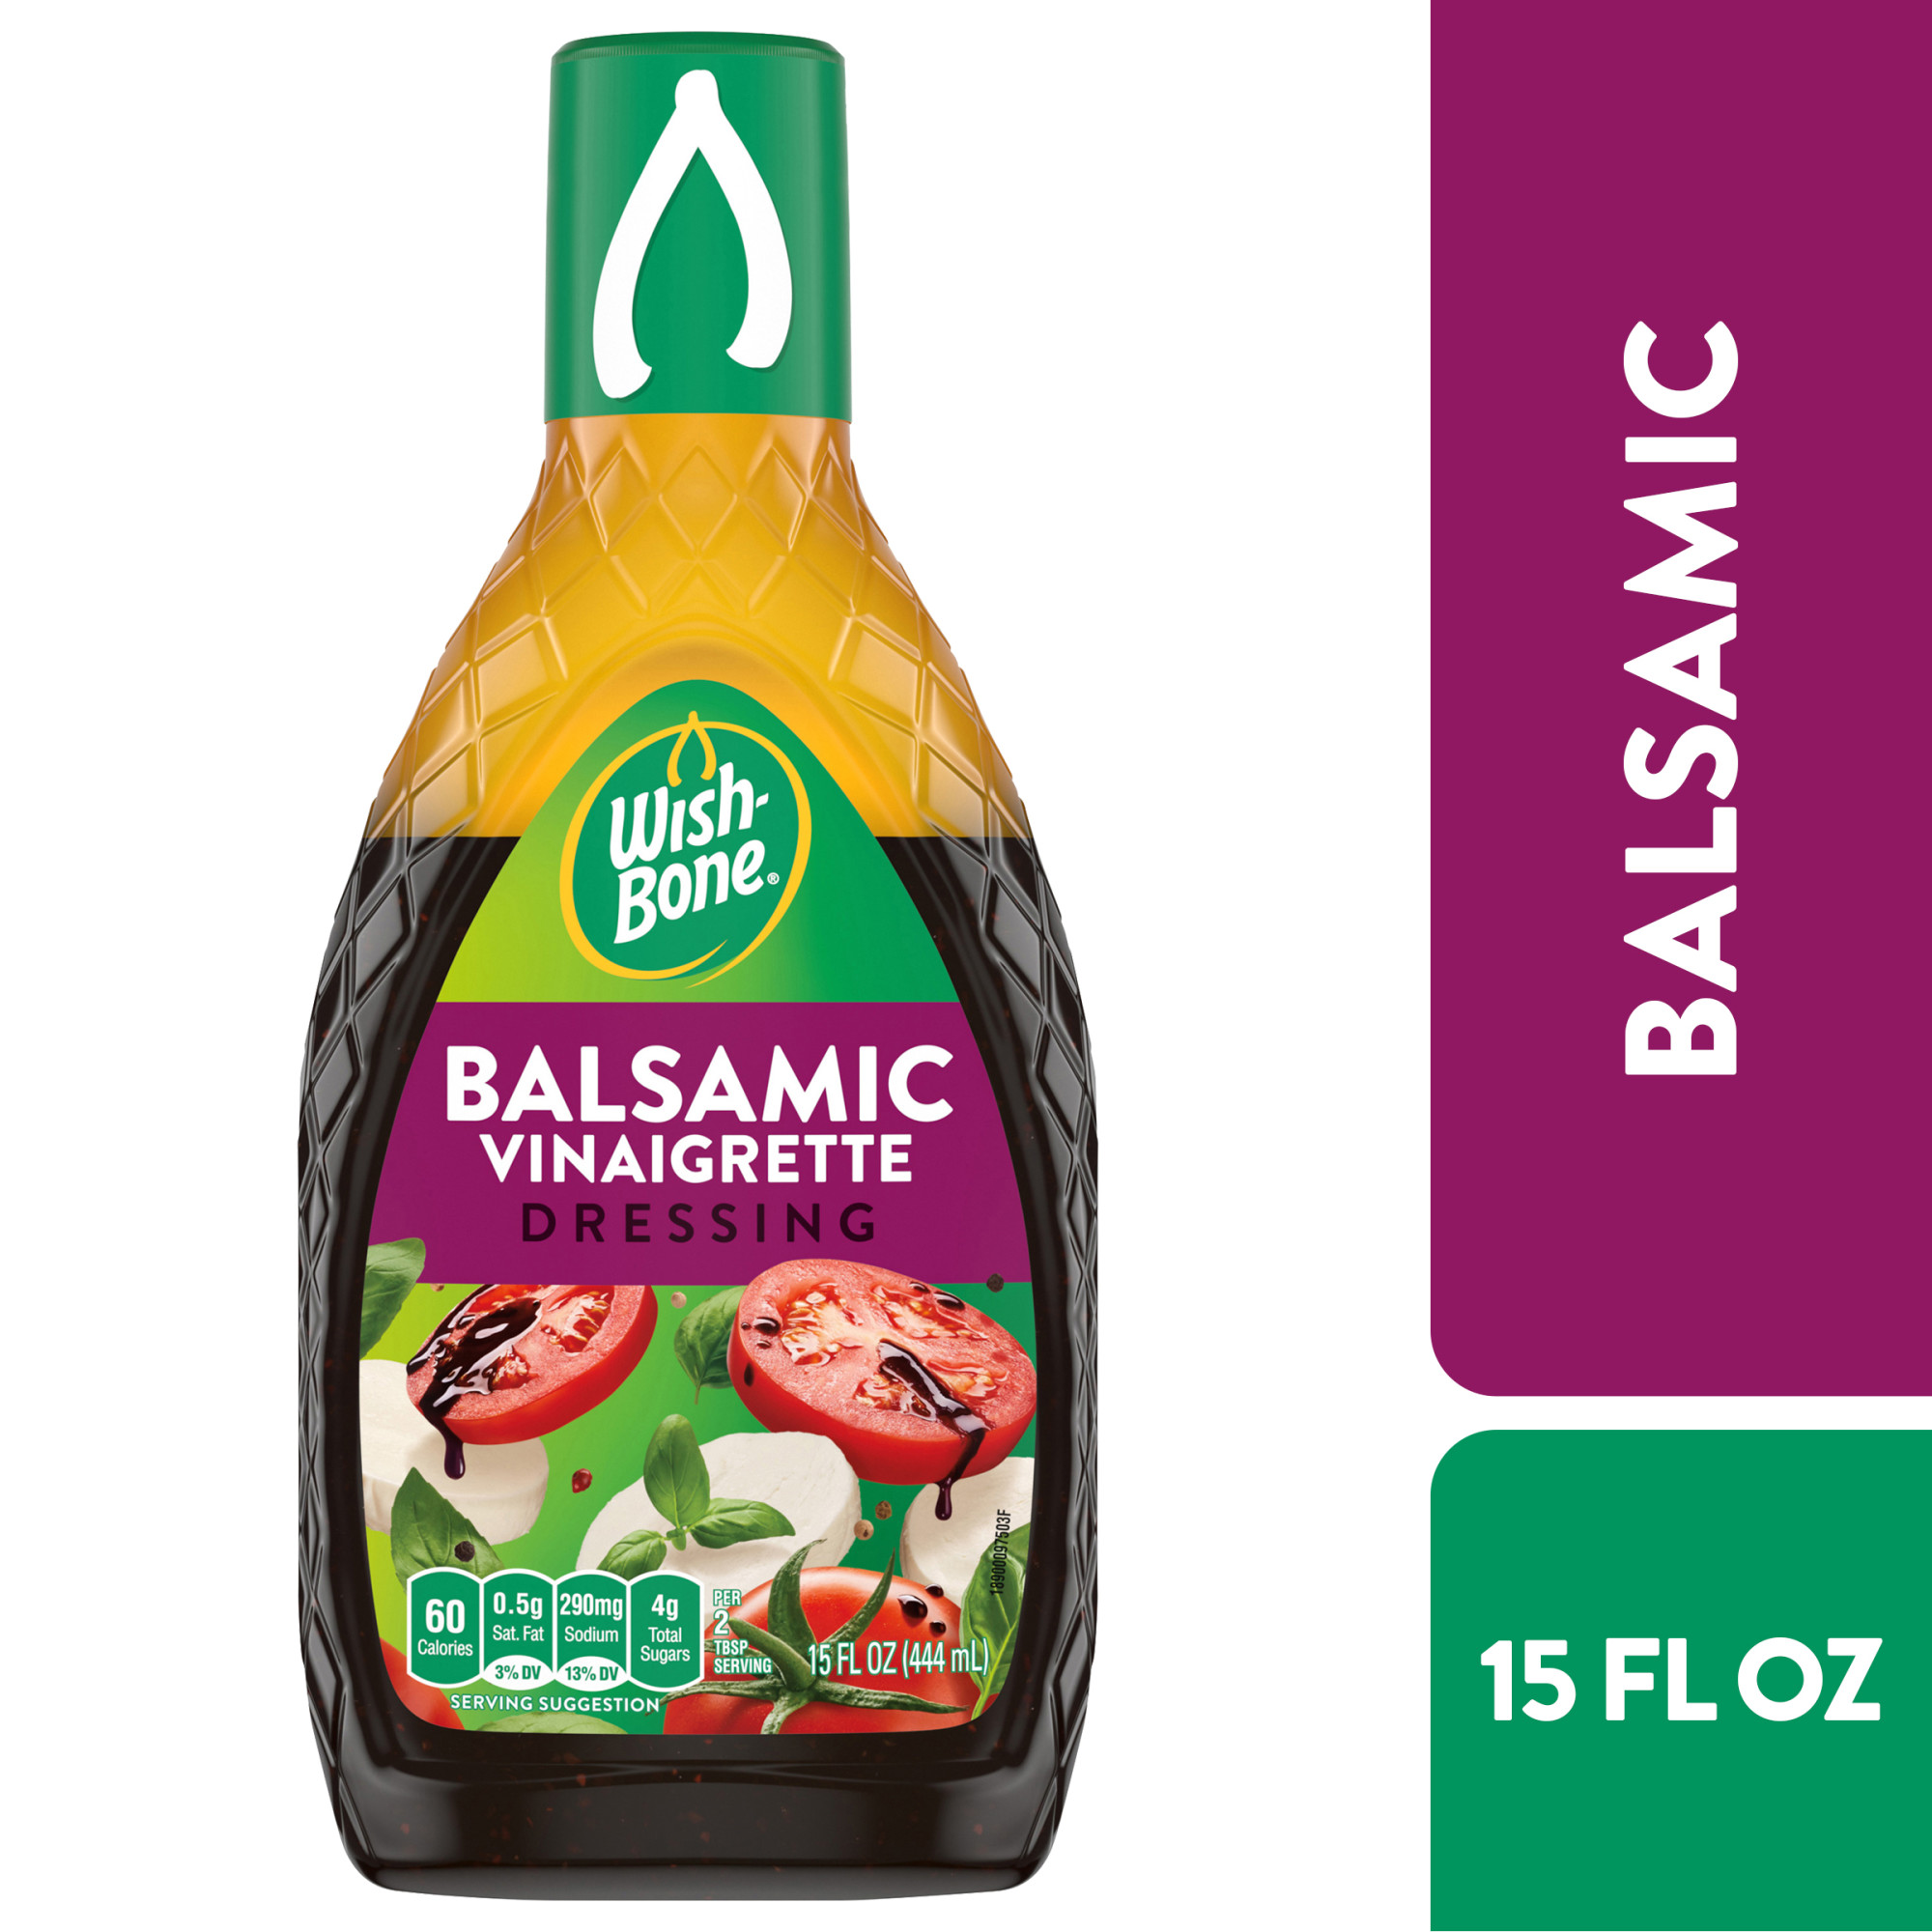 Wish-Bone Balsamic Vinaigrette Salad Dressing, 15 fl oz - image 1 of 7